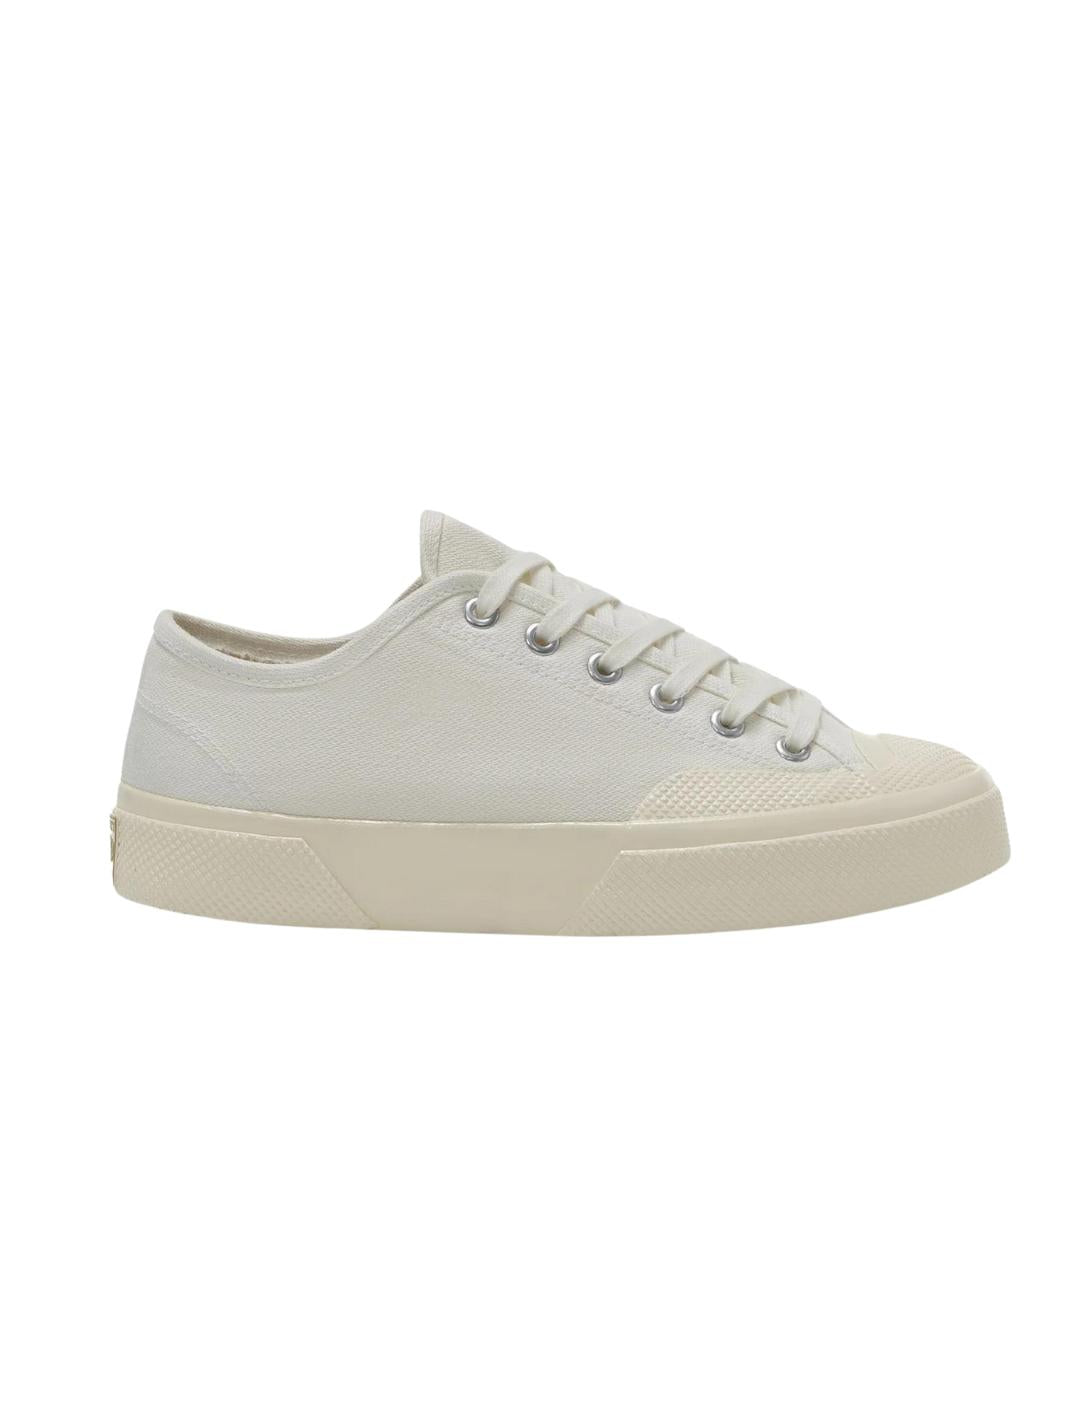 Superga Shoes Sneakers | Artifact 2432 Workwear White/Off-White